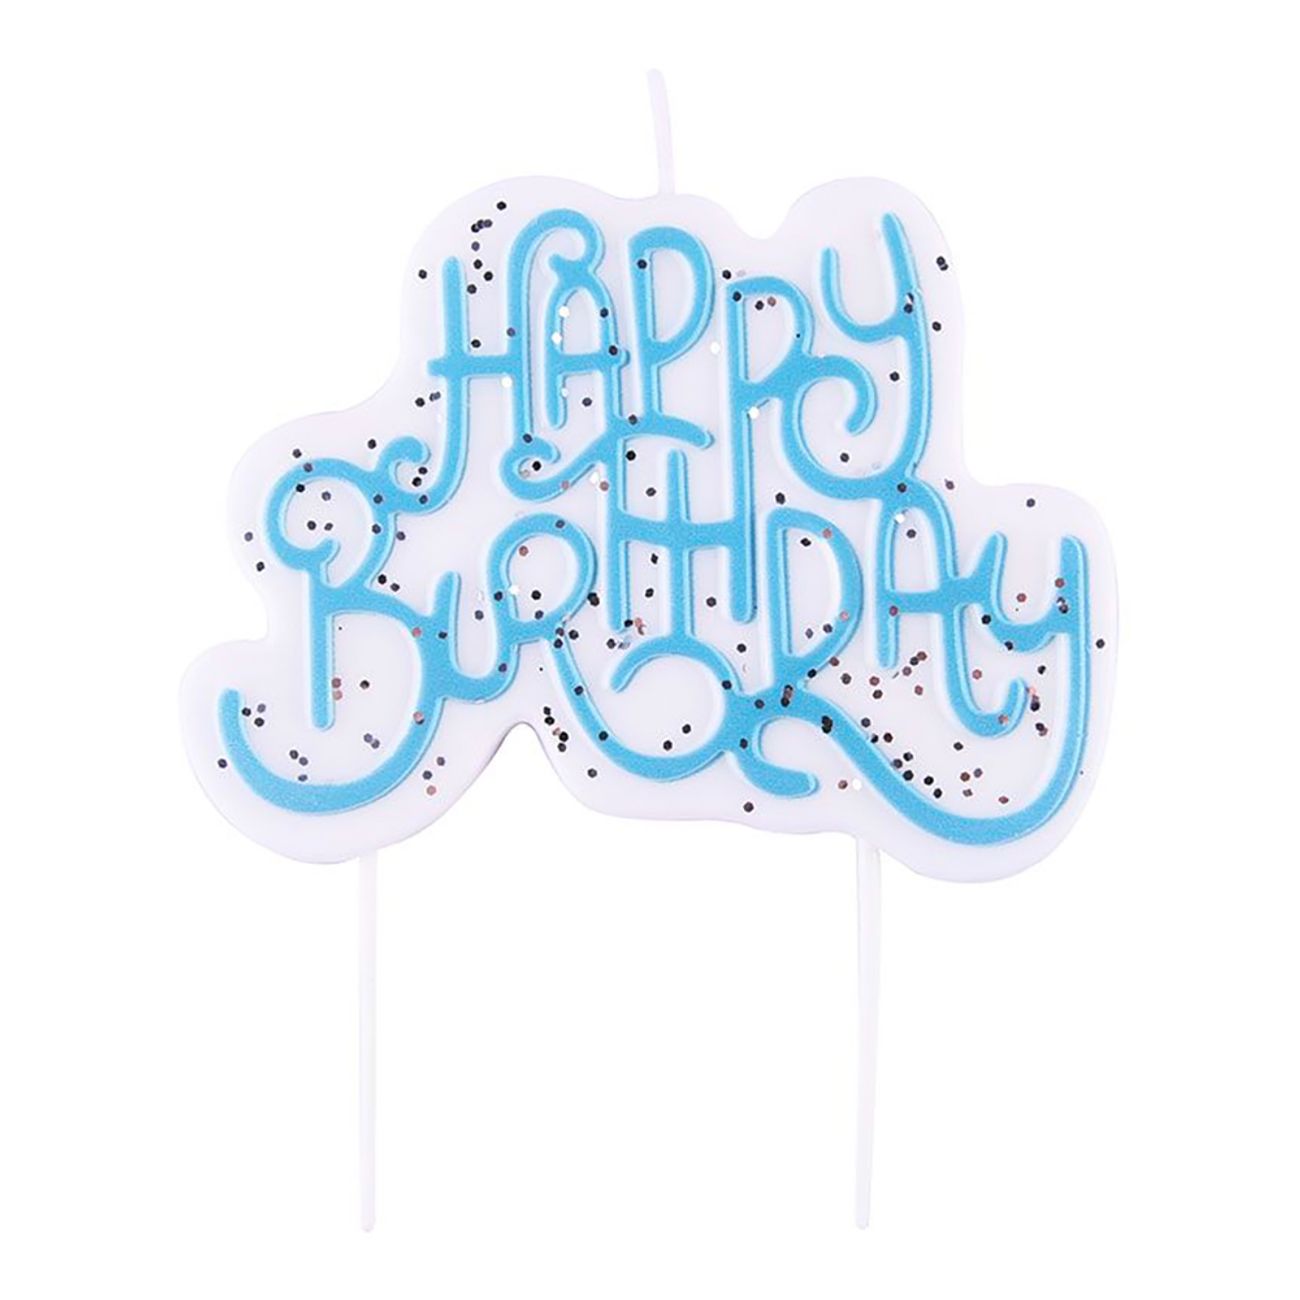 pme-tartljus-happy-birthday-bla-sparkle-84888-1